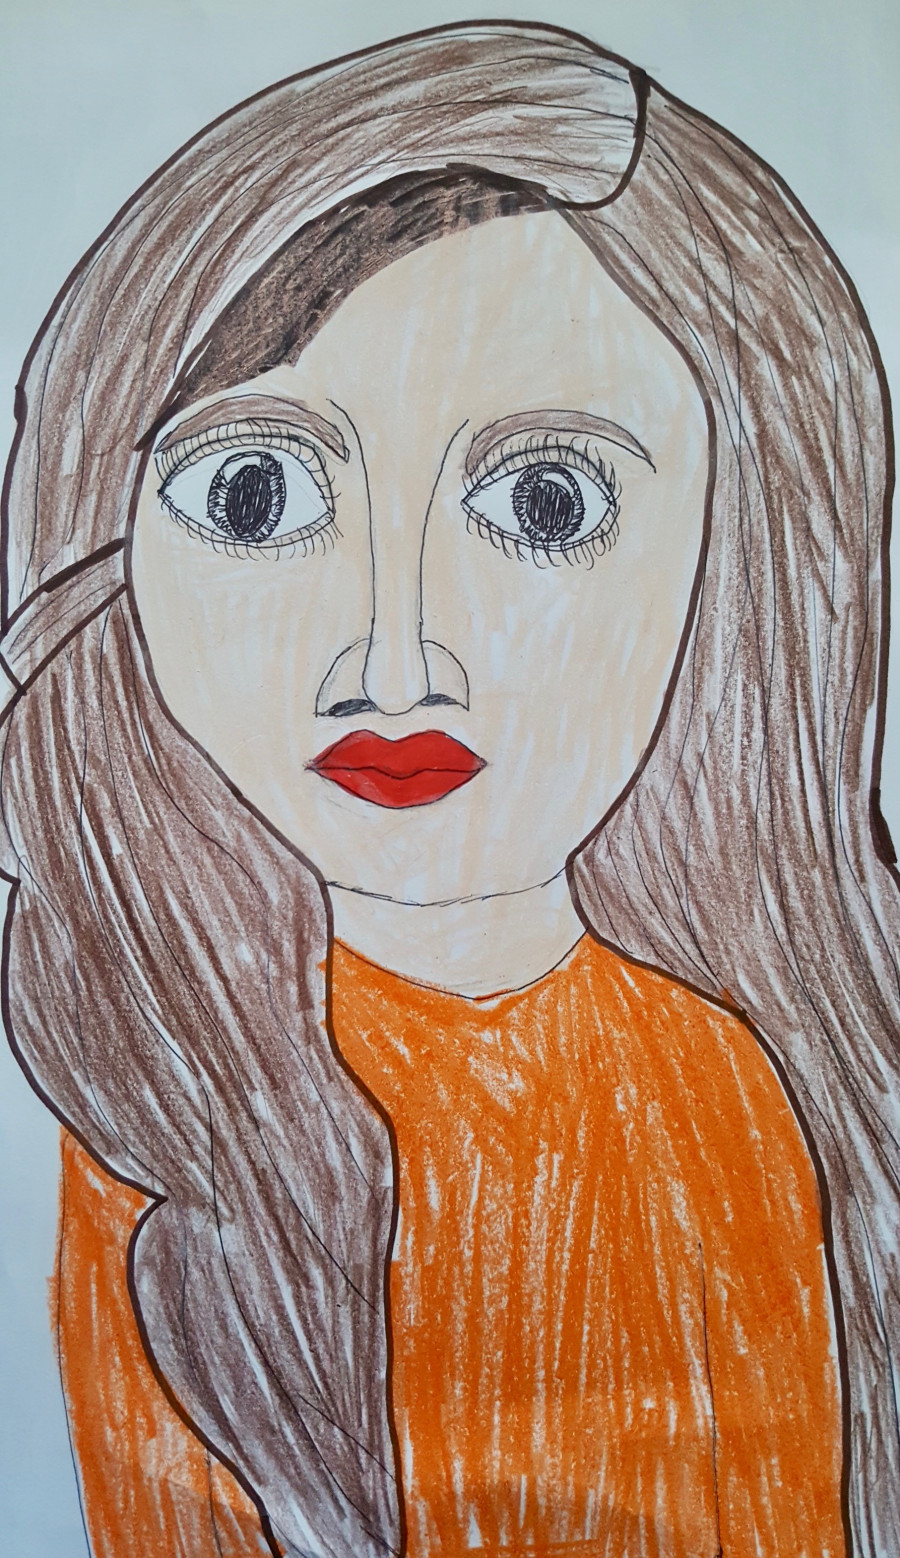 'Girl in a orange hoodie' by Kamanpreet (12) from Dublin